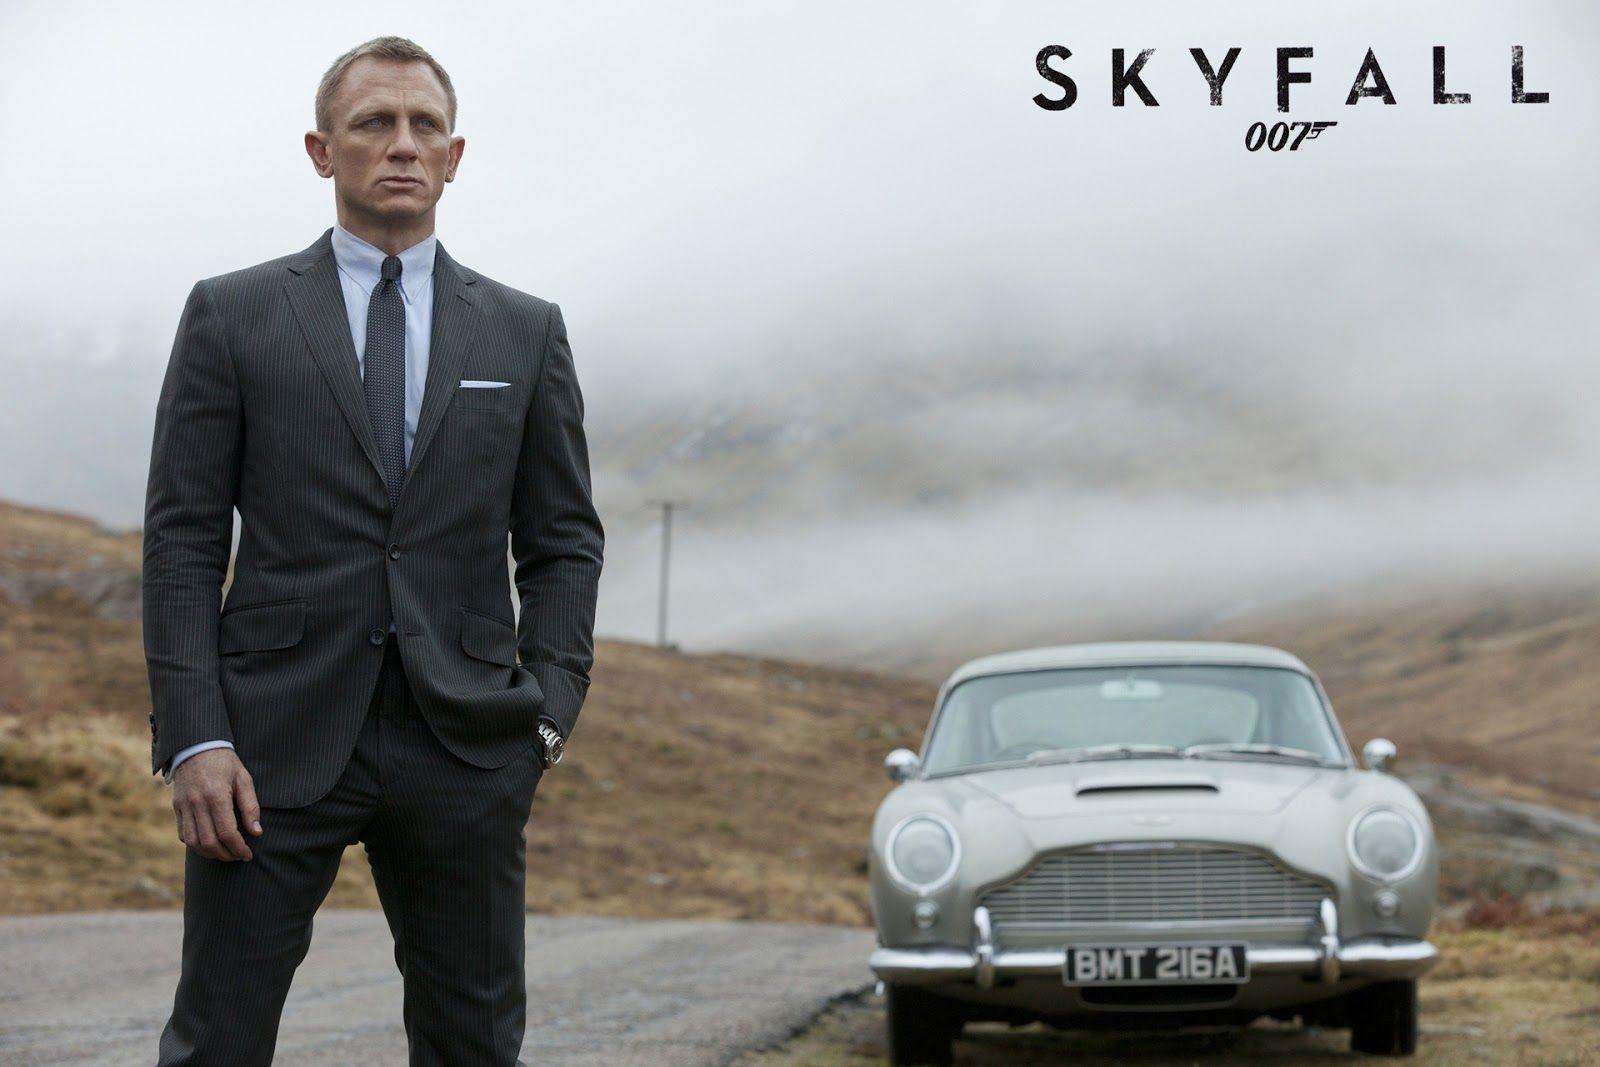 James Bond 007 Wallpaper